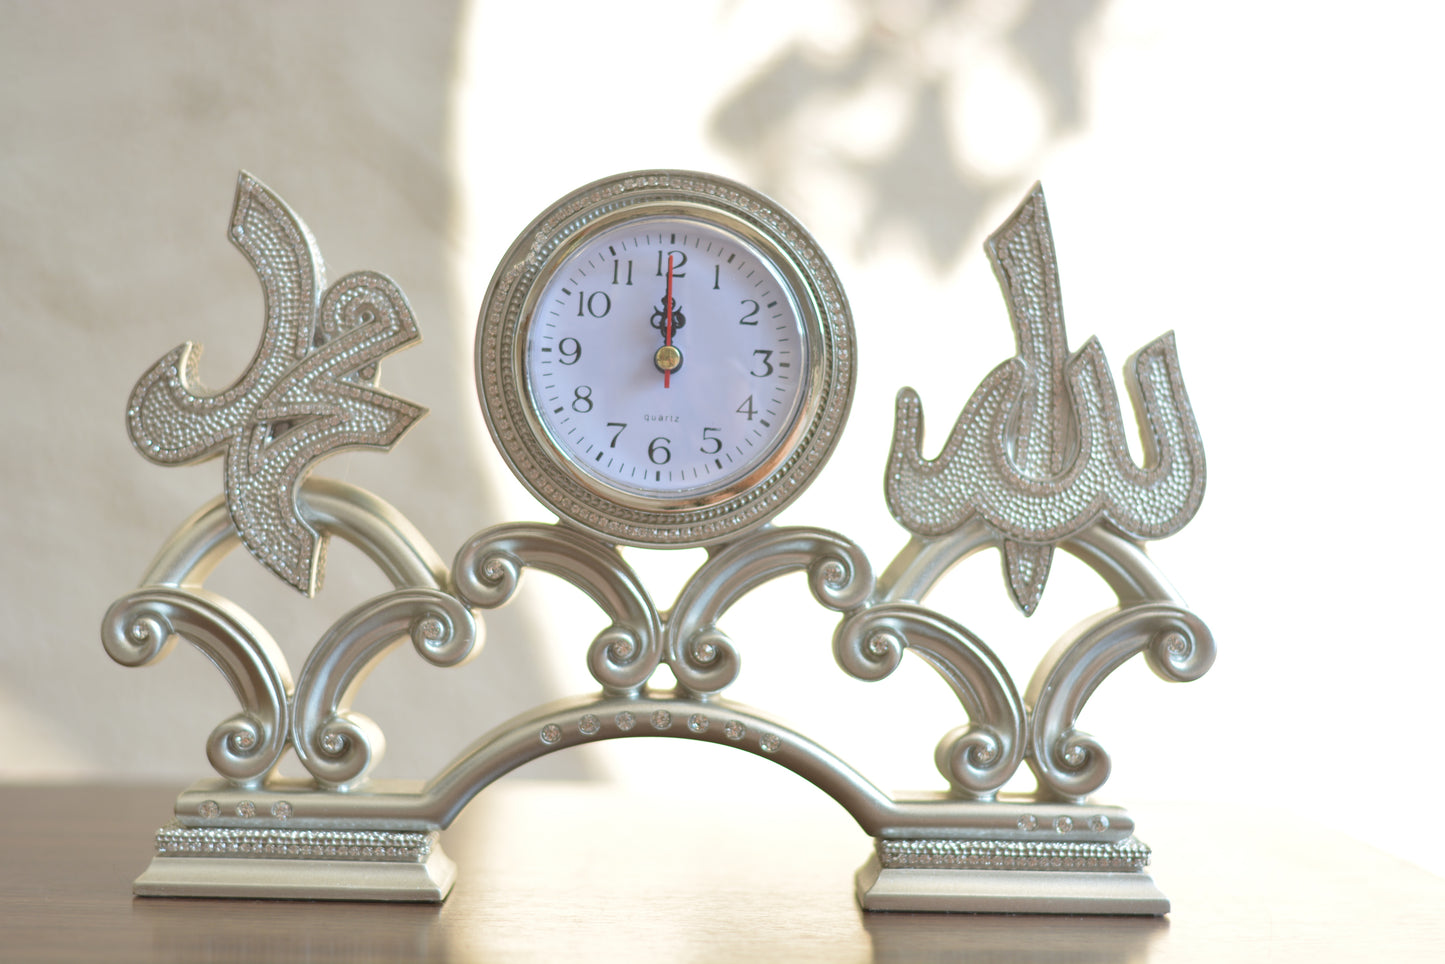 Jeweled Islamic Desk Clock-Allah/Muhammad